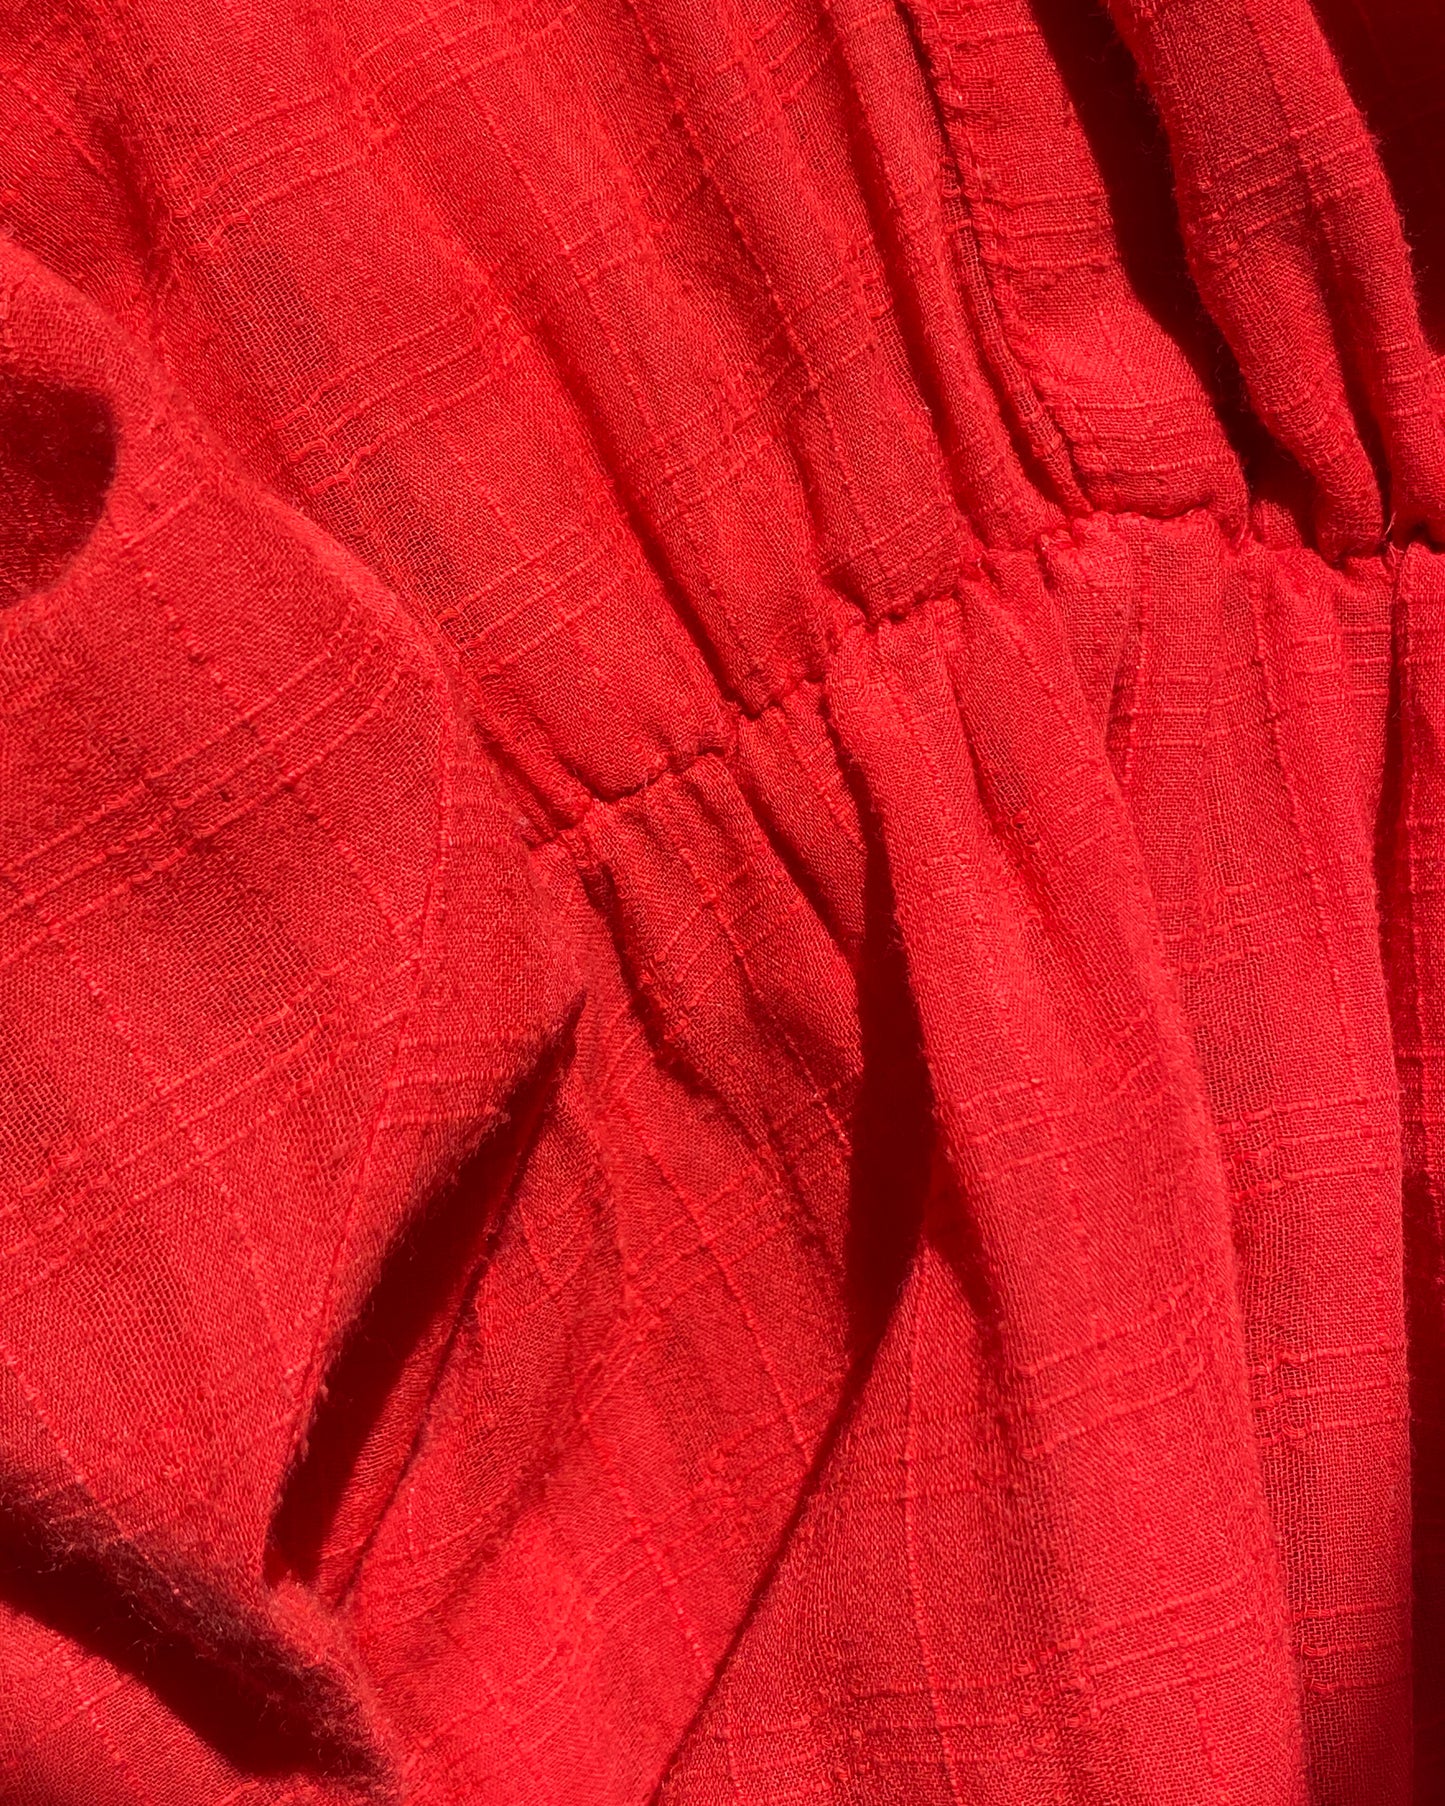 1970s Red Western Dress | 8-10